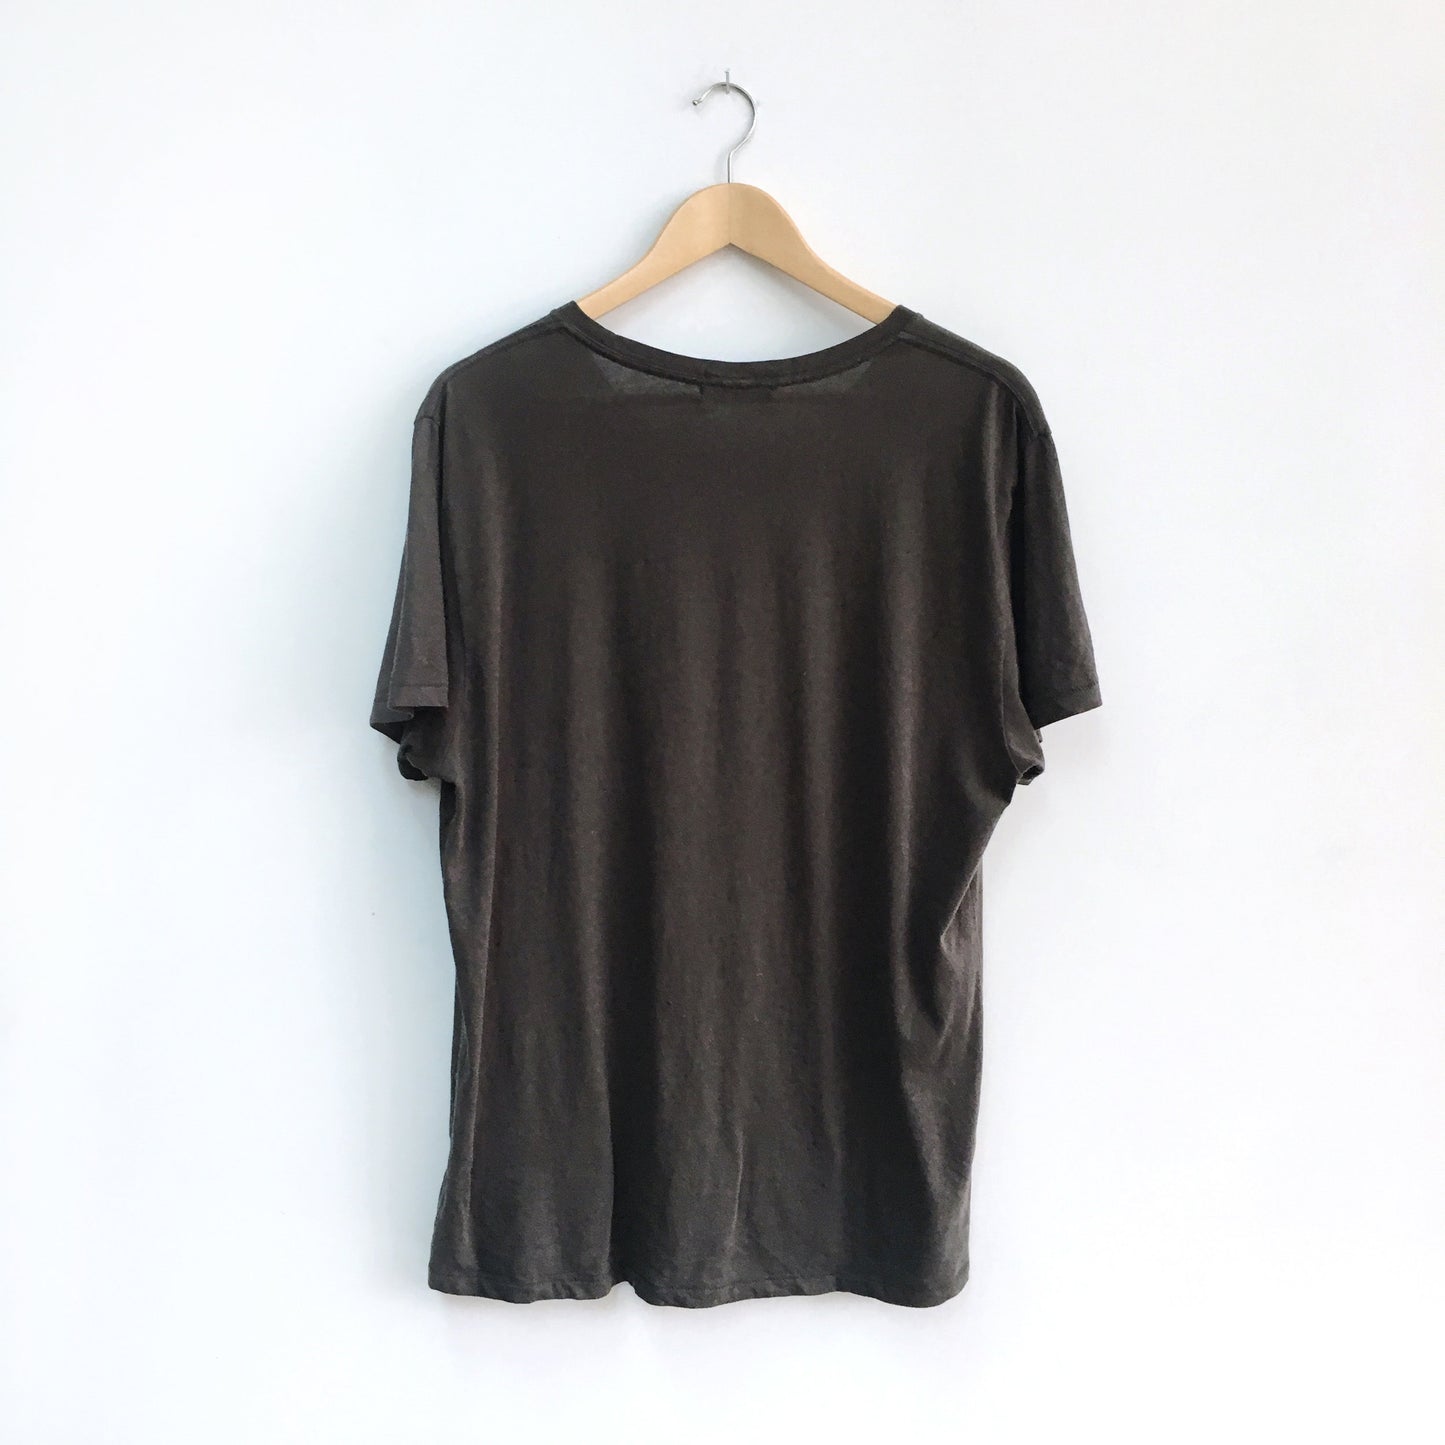 Correll Correll Velvet Circle T-shirt - size Medium